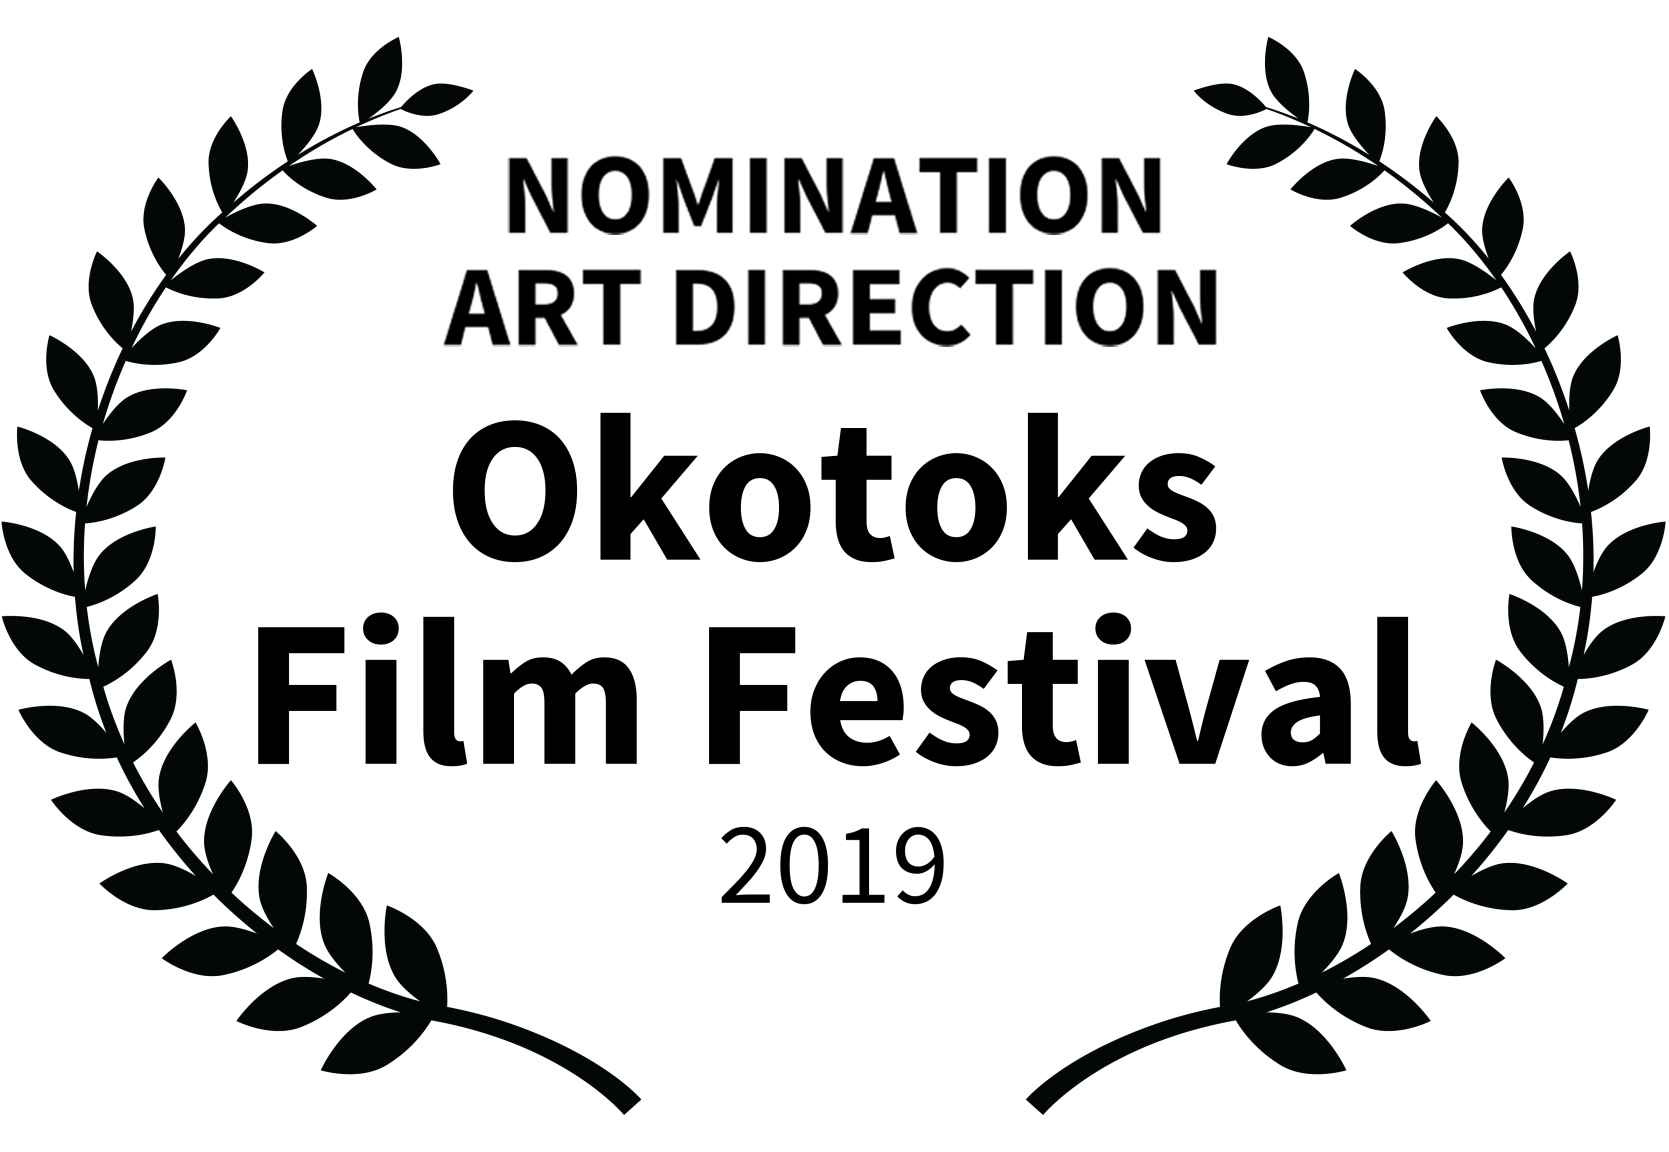 Kathryn Ann Jankowski's Nomination Art Direction award from Okotoks Film Festival in 2019